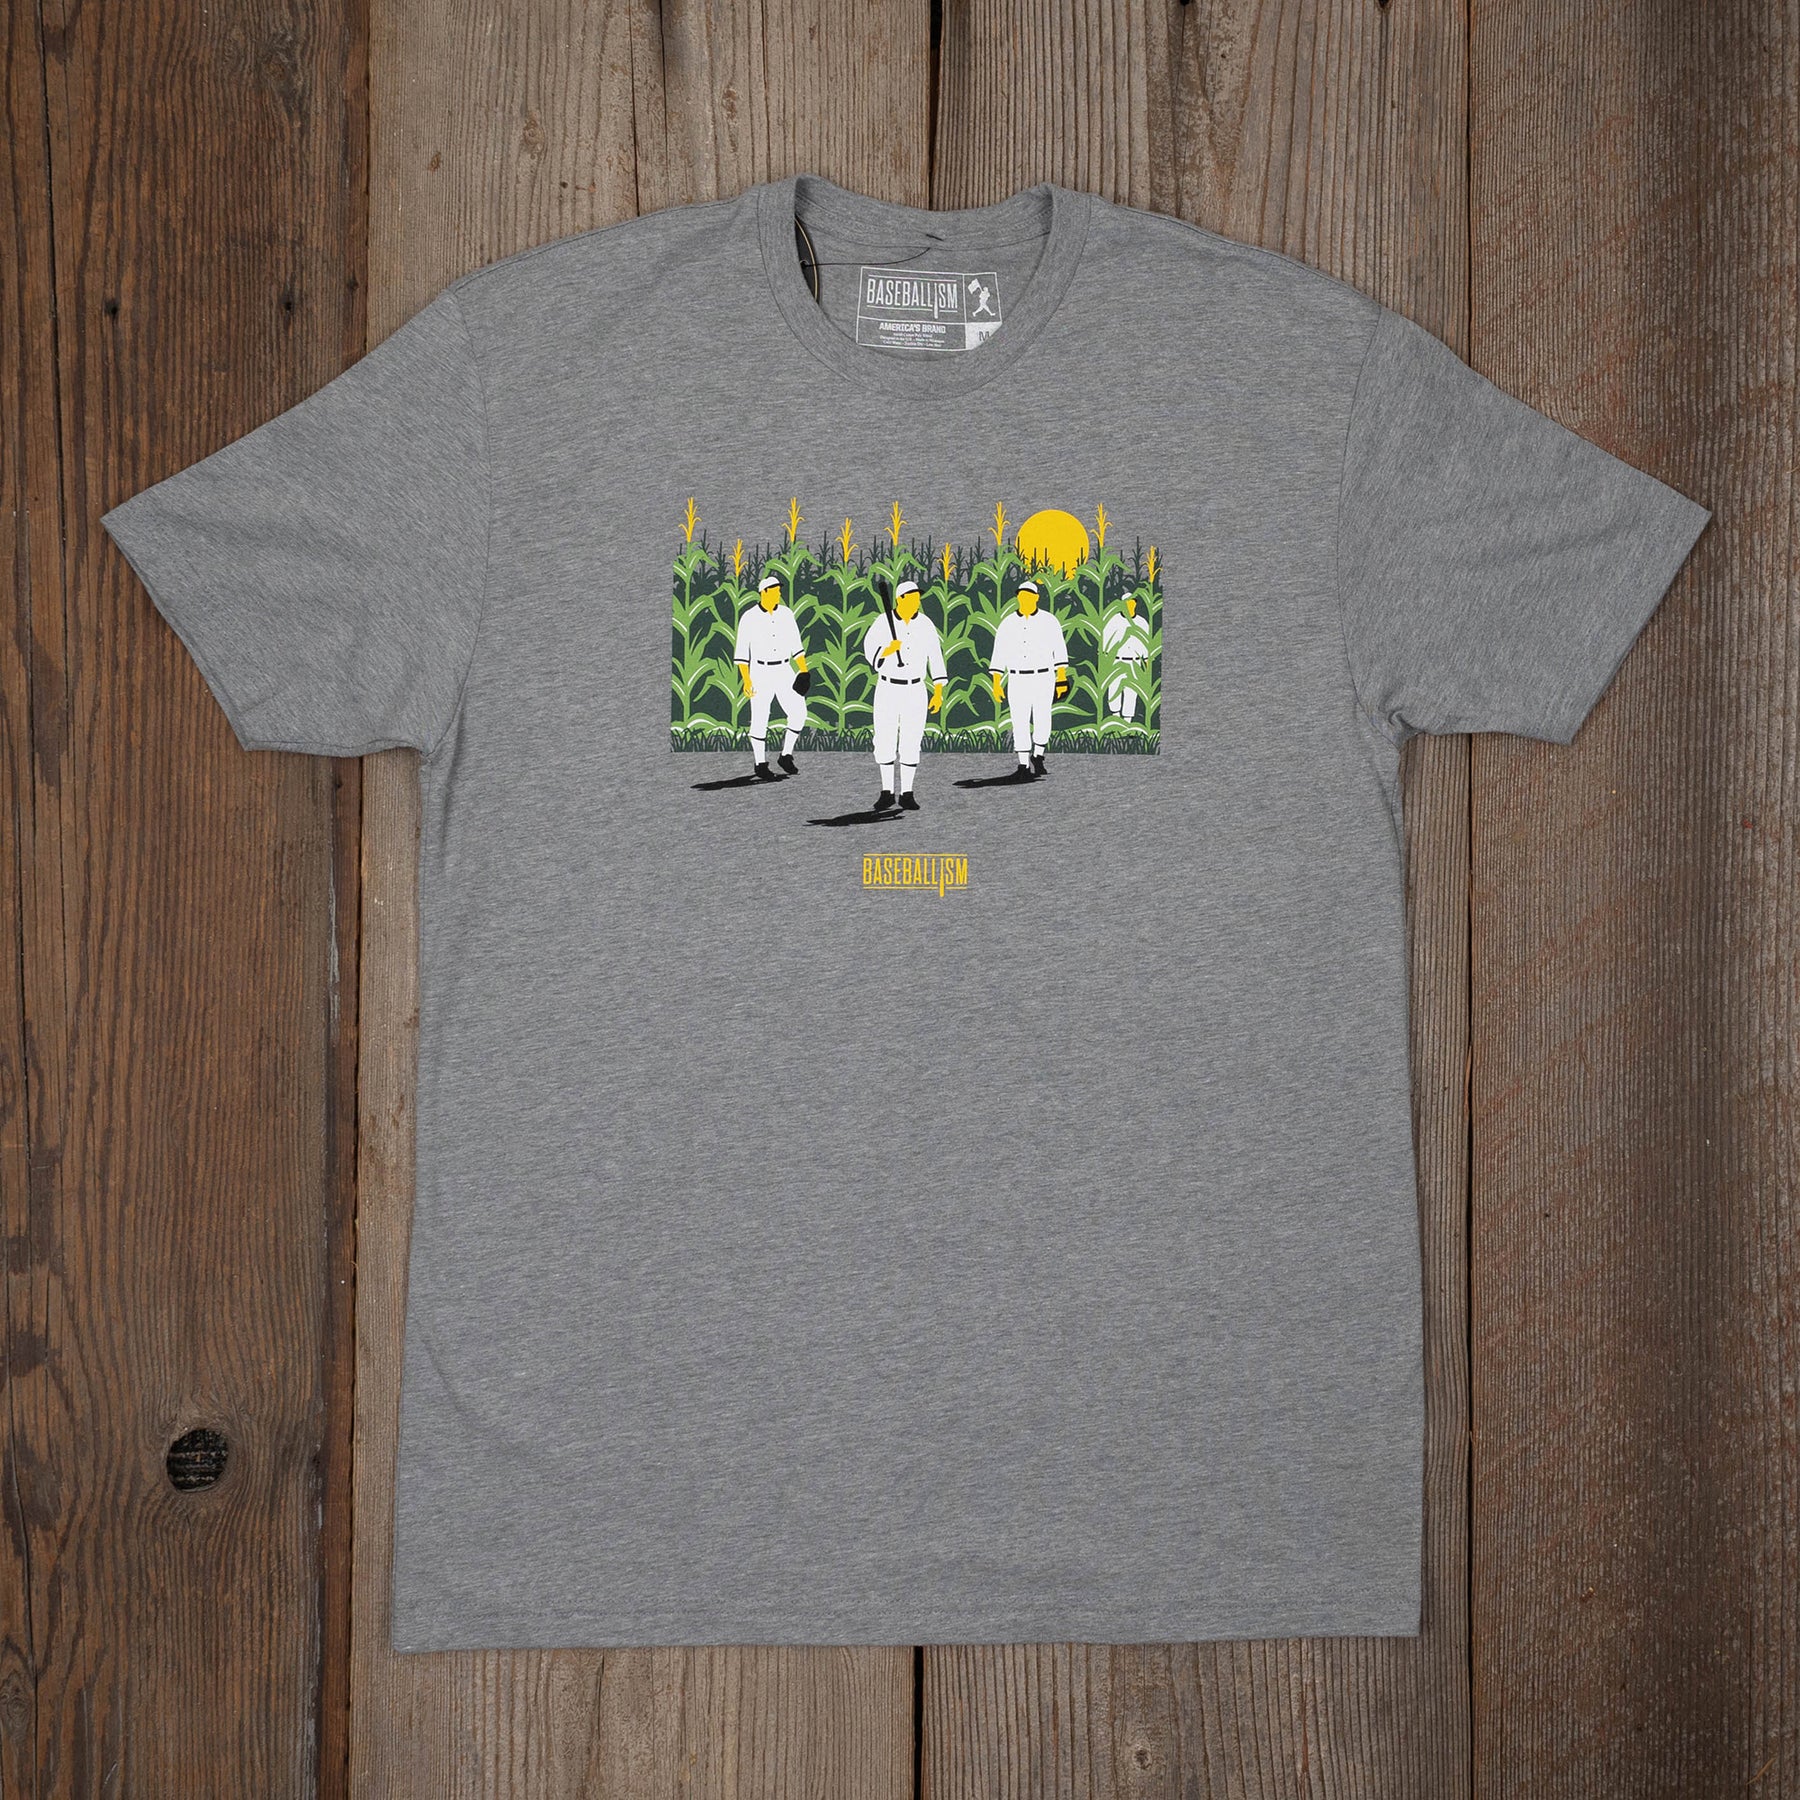 Field of Dreams - This Field T-Shirt | Baseballism x Field of Dreams ...